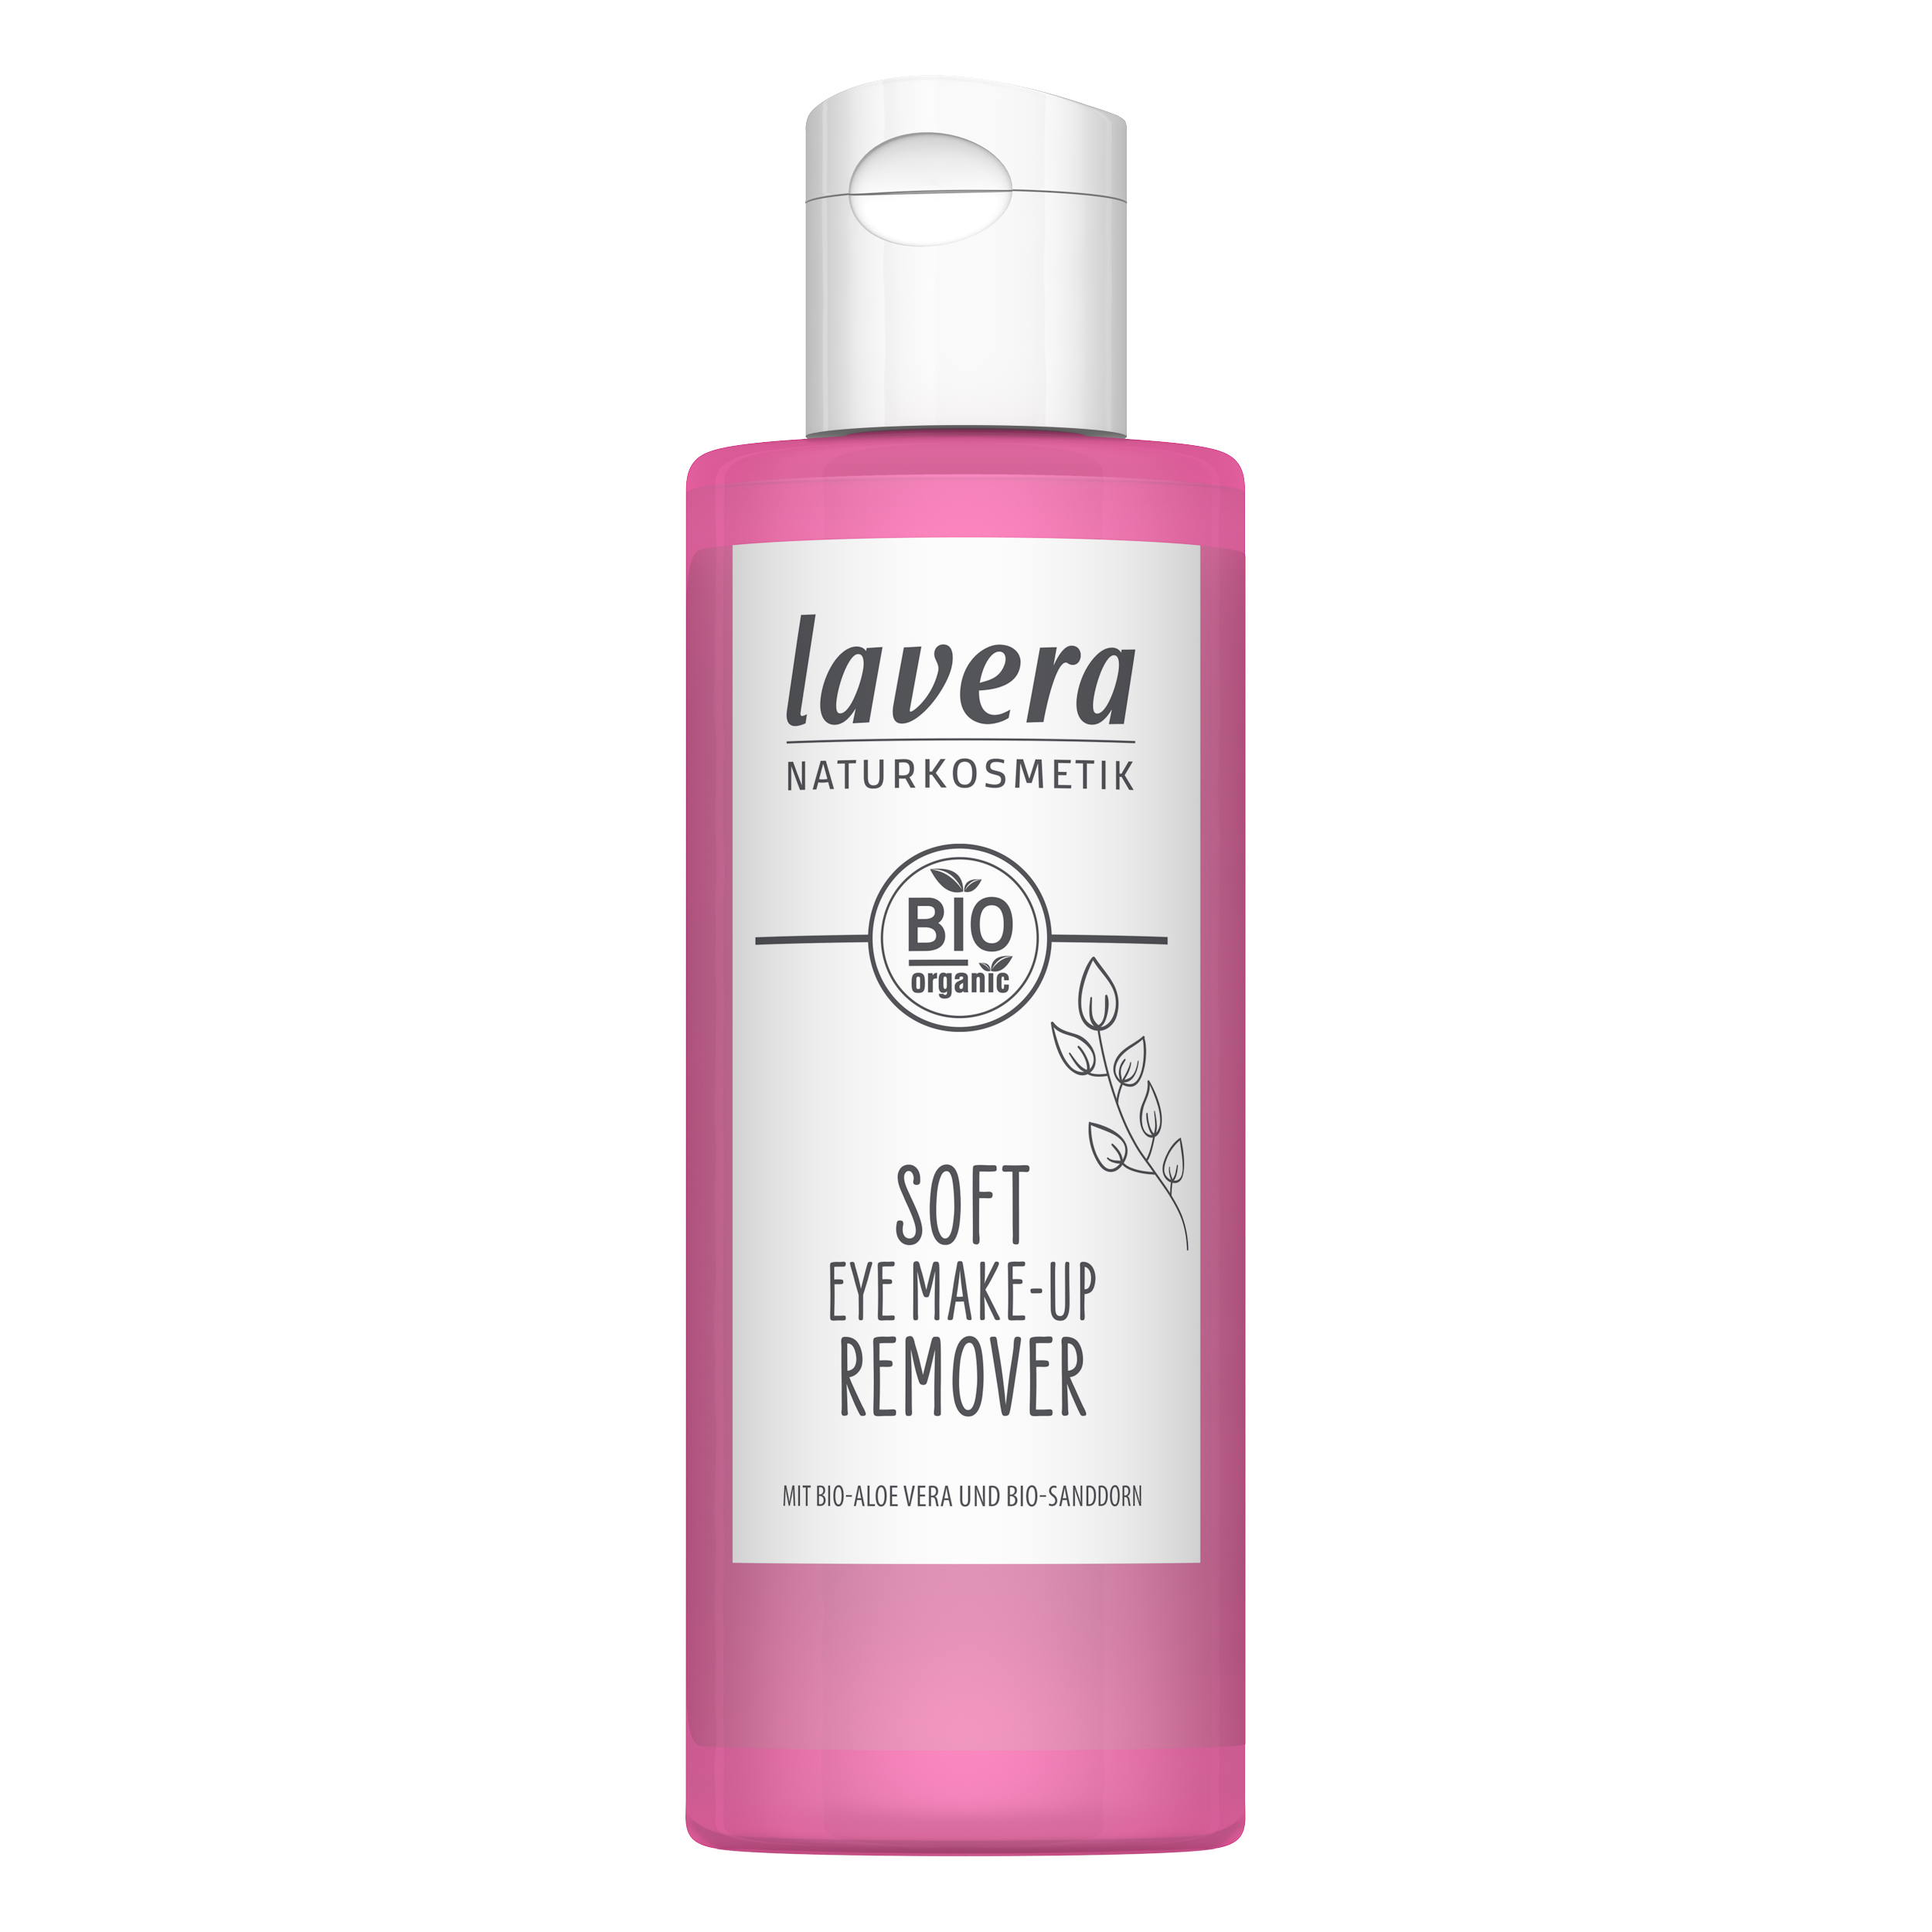 Lavera Soft Eye Make Up Remover - 100ml